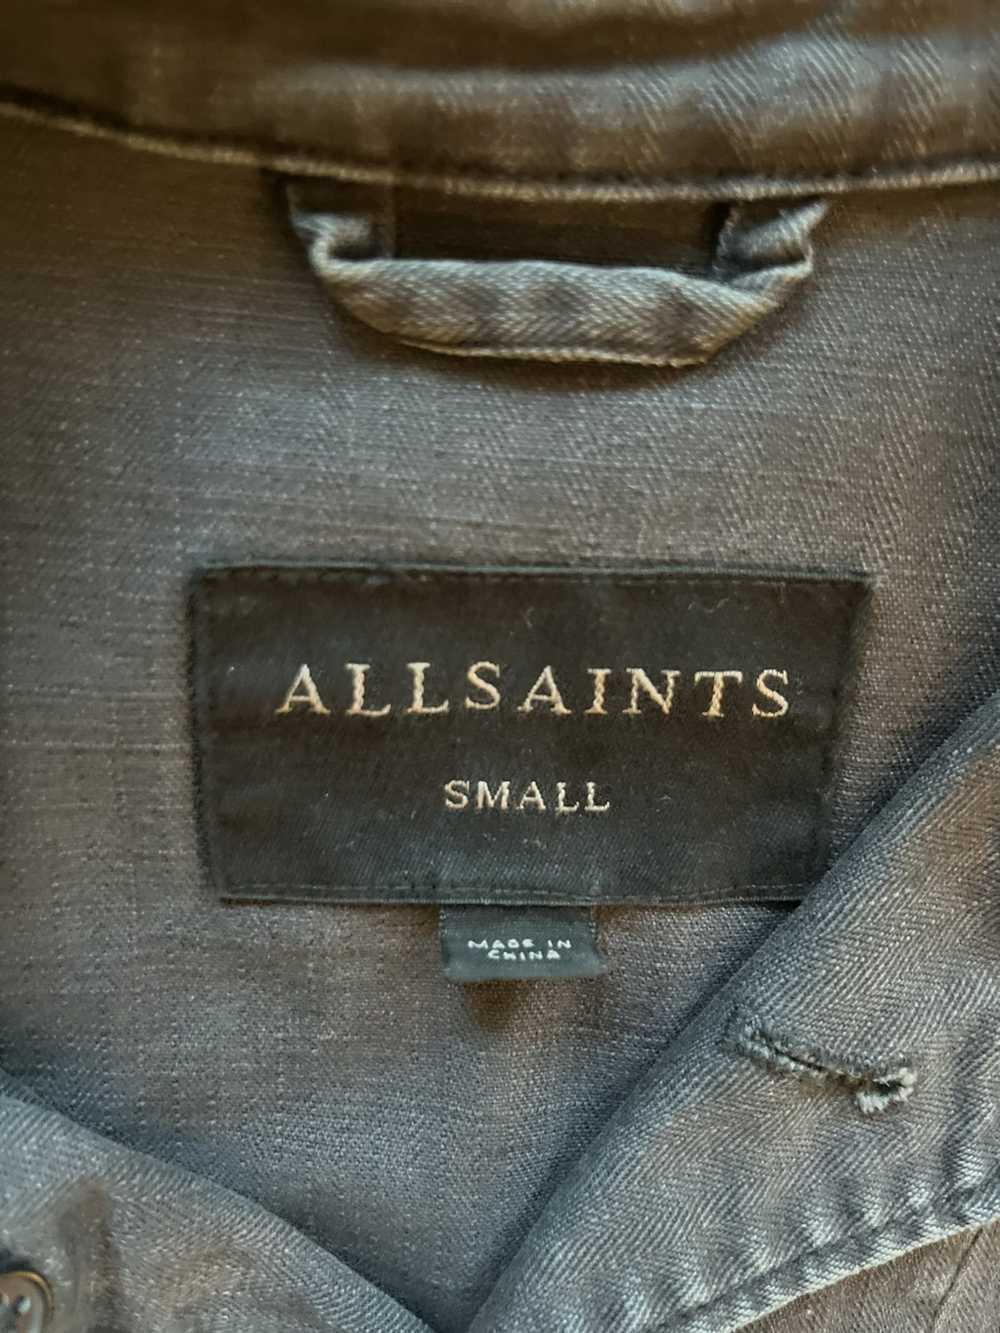 Allsaints Allsaints Shirt Jacket - image 3